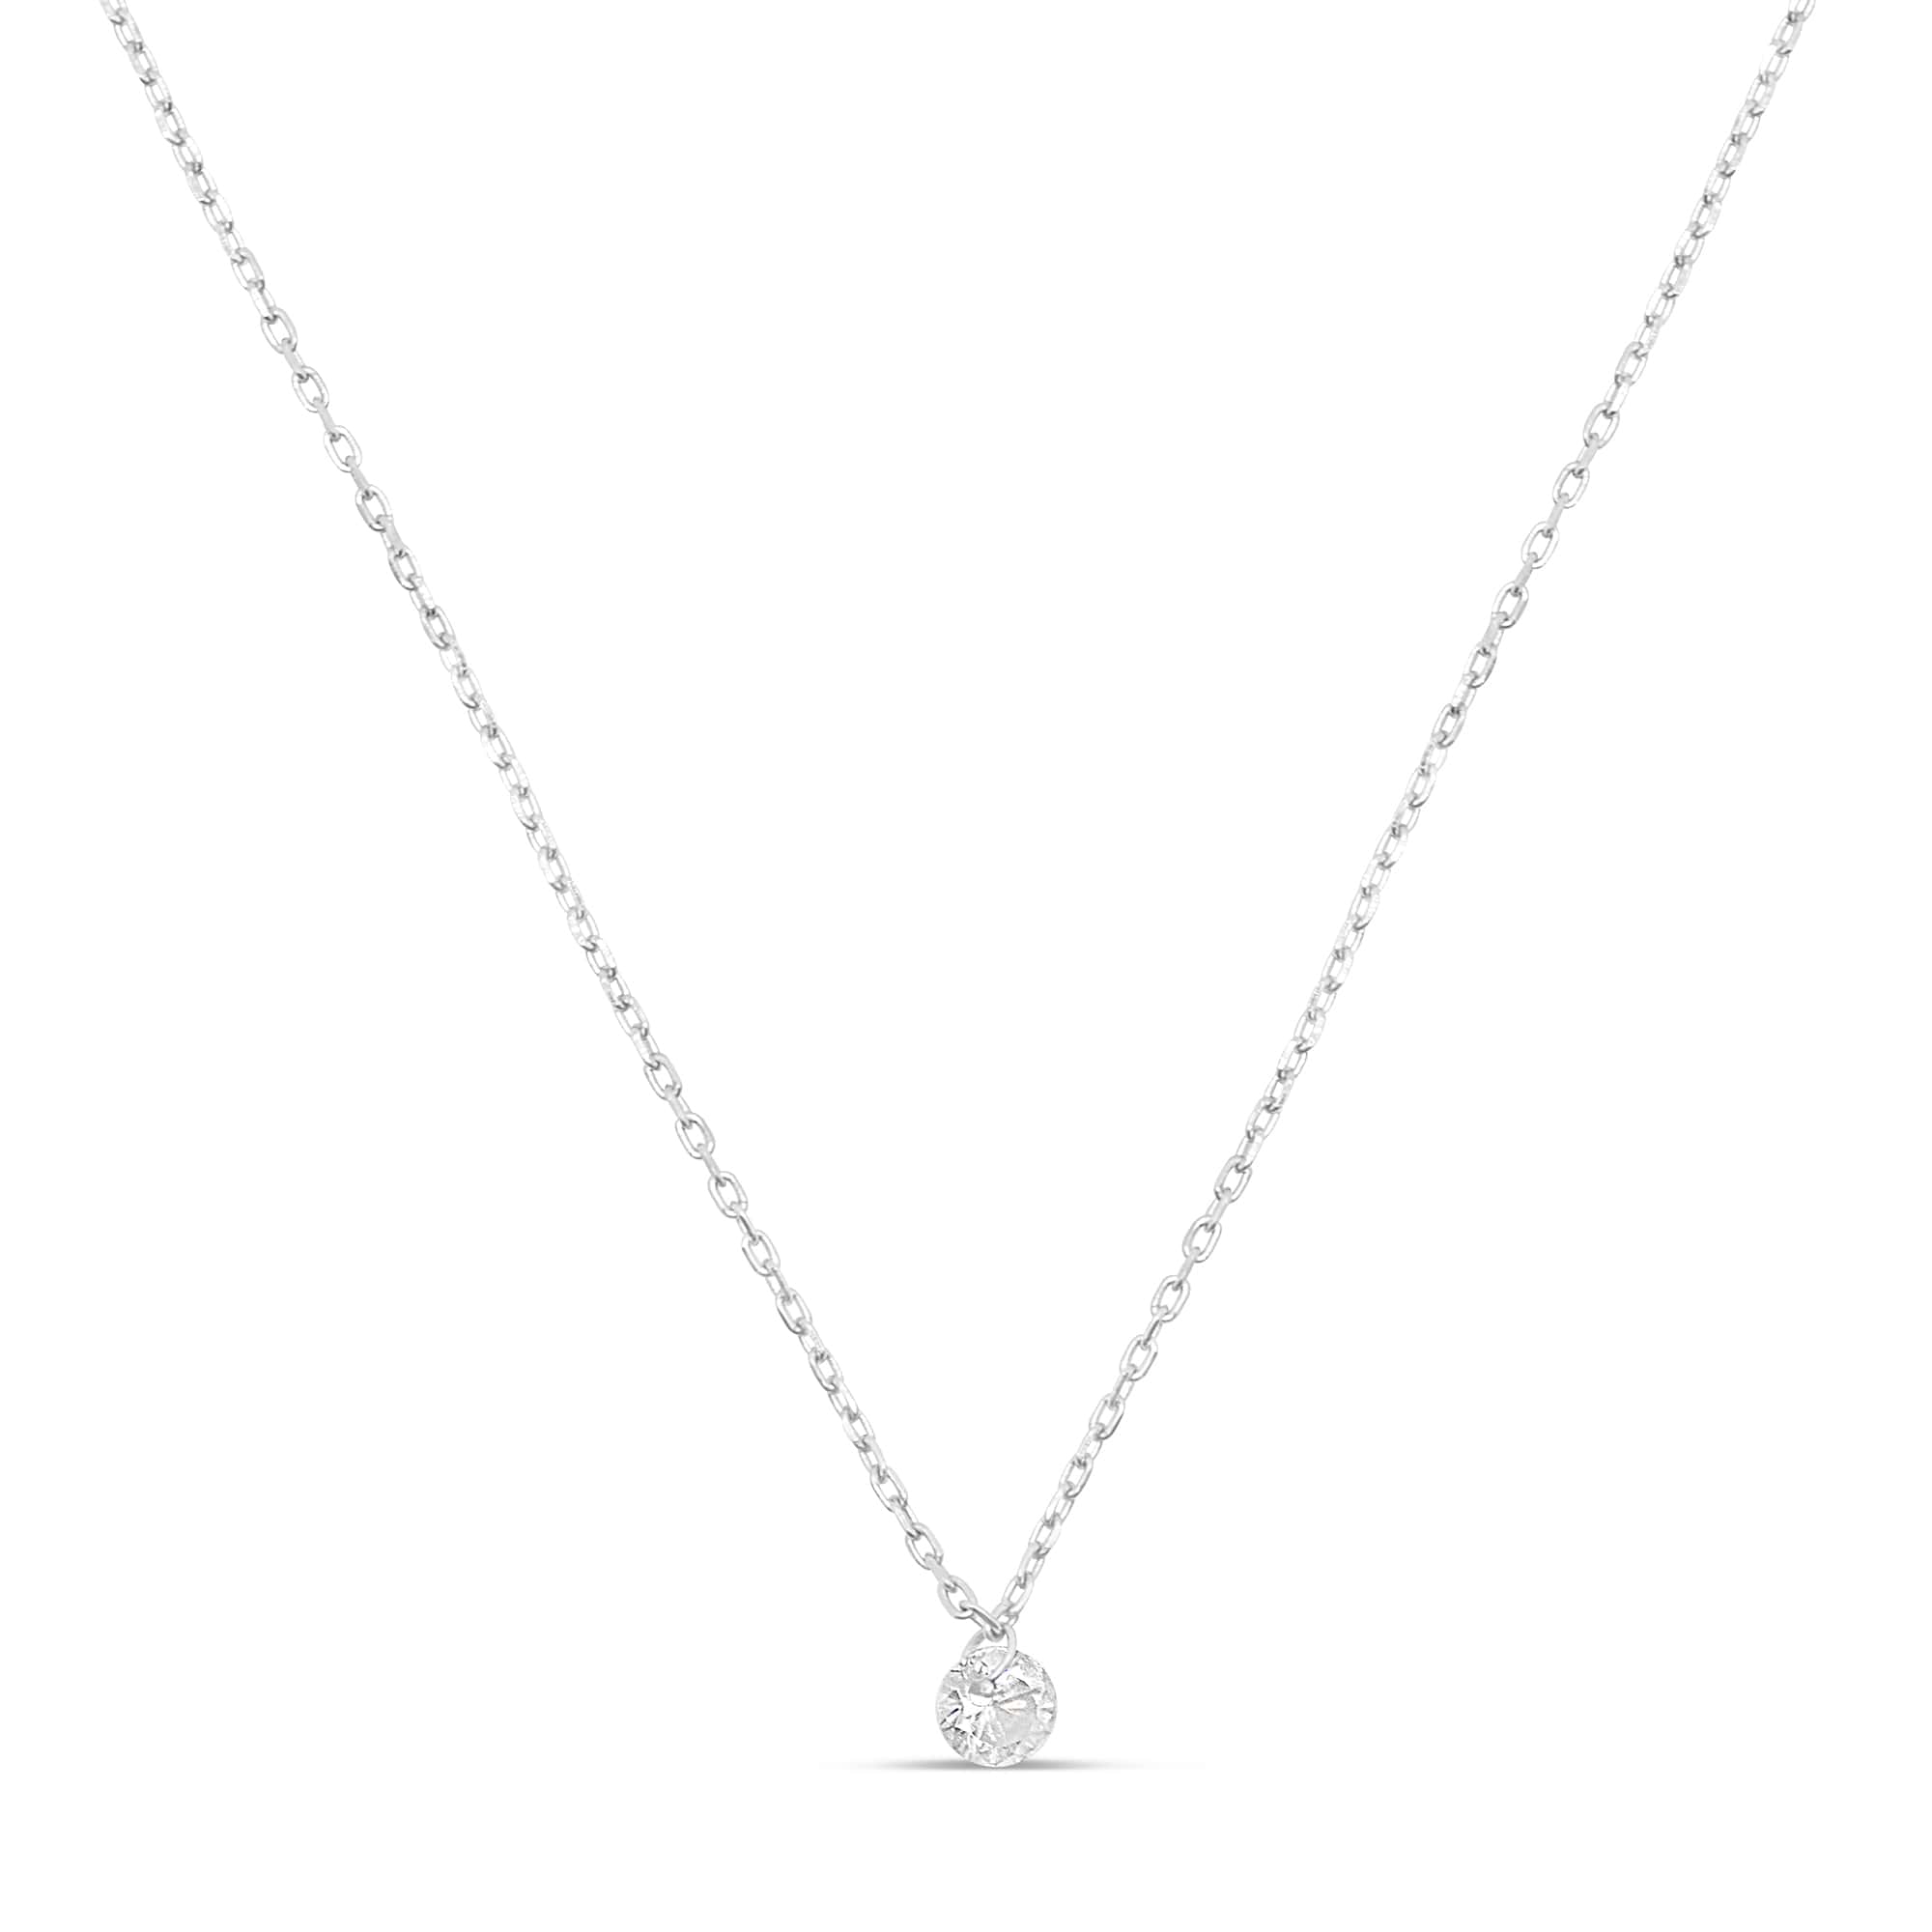 Single cubic zirconia stone necklace silver